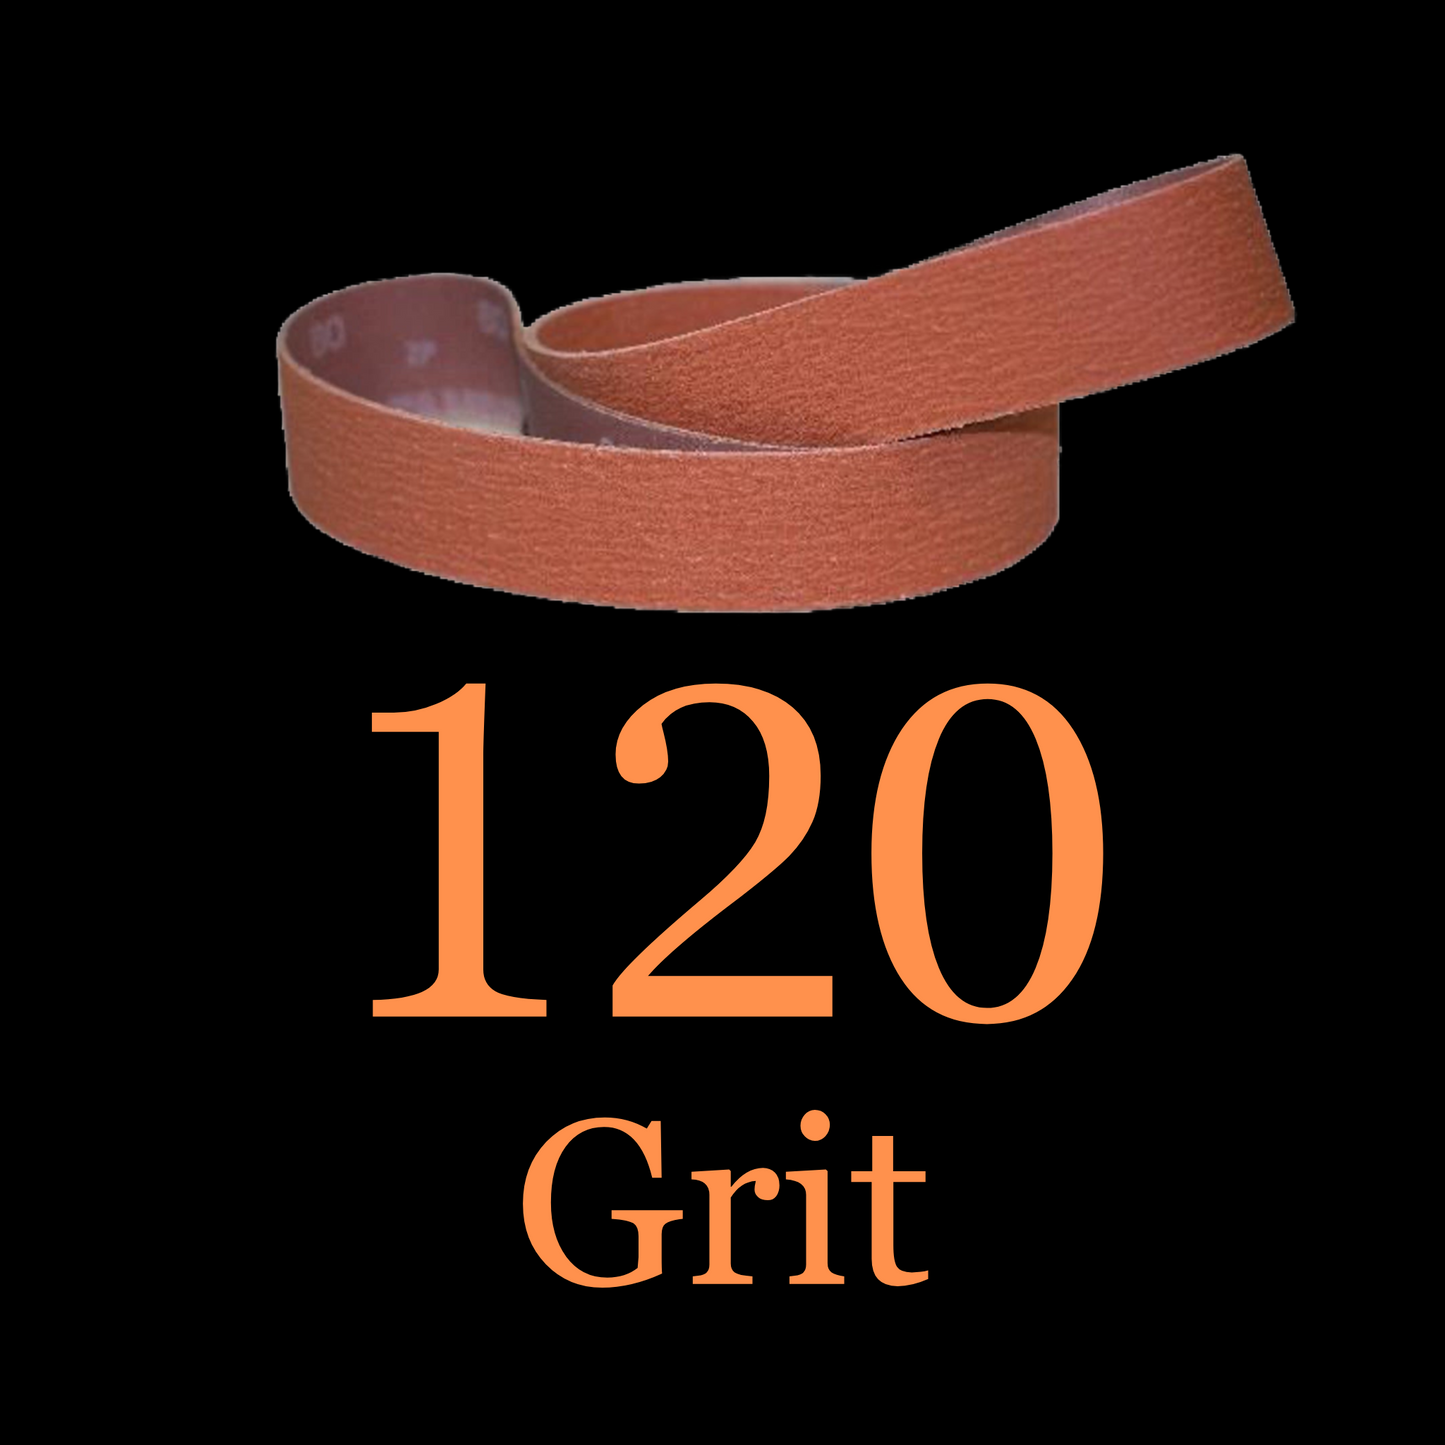 4” x 36” Blaze Ceramic Belt 120 Grit